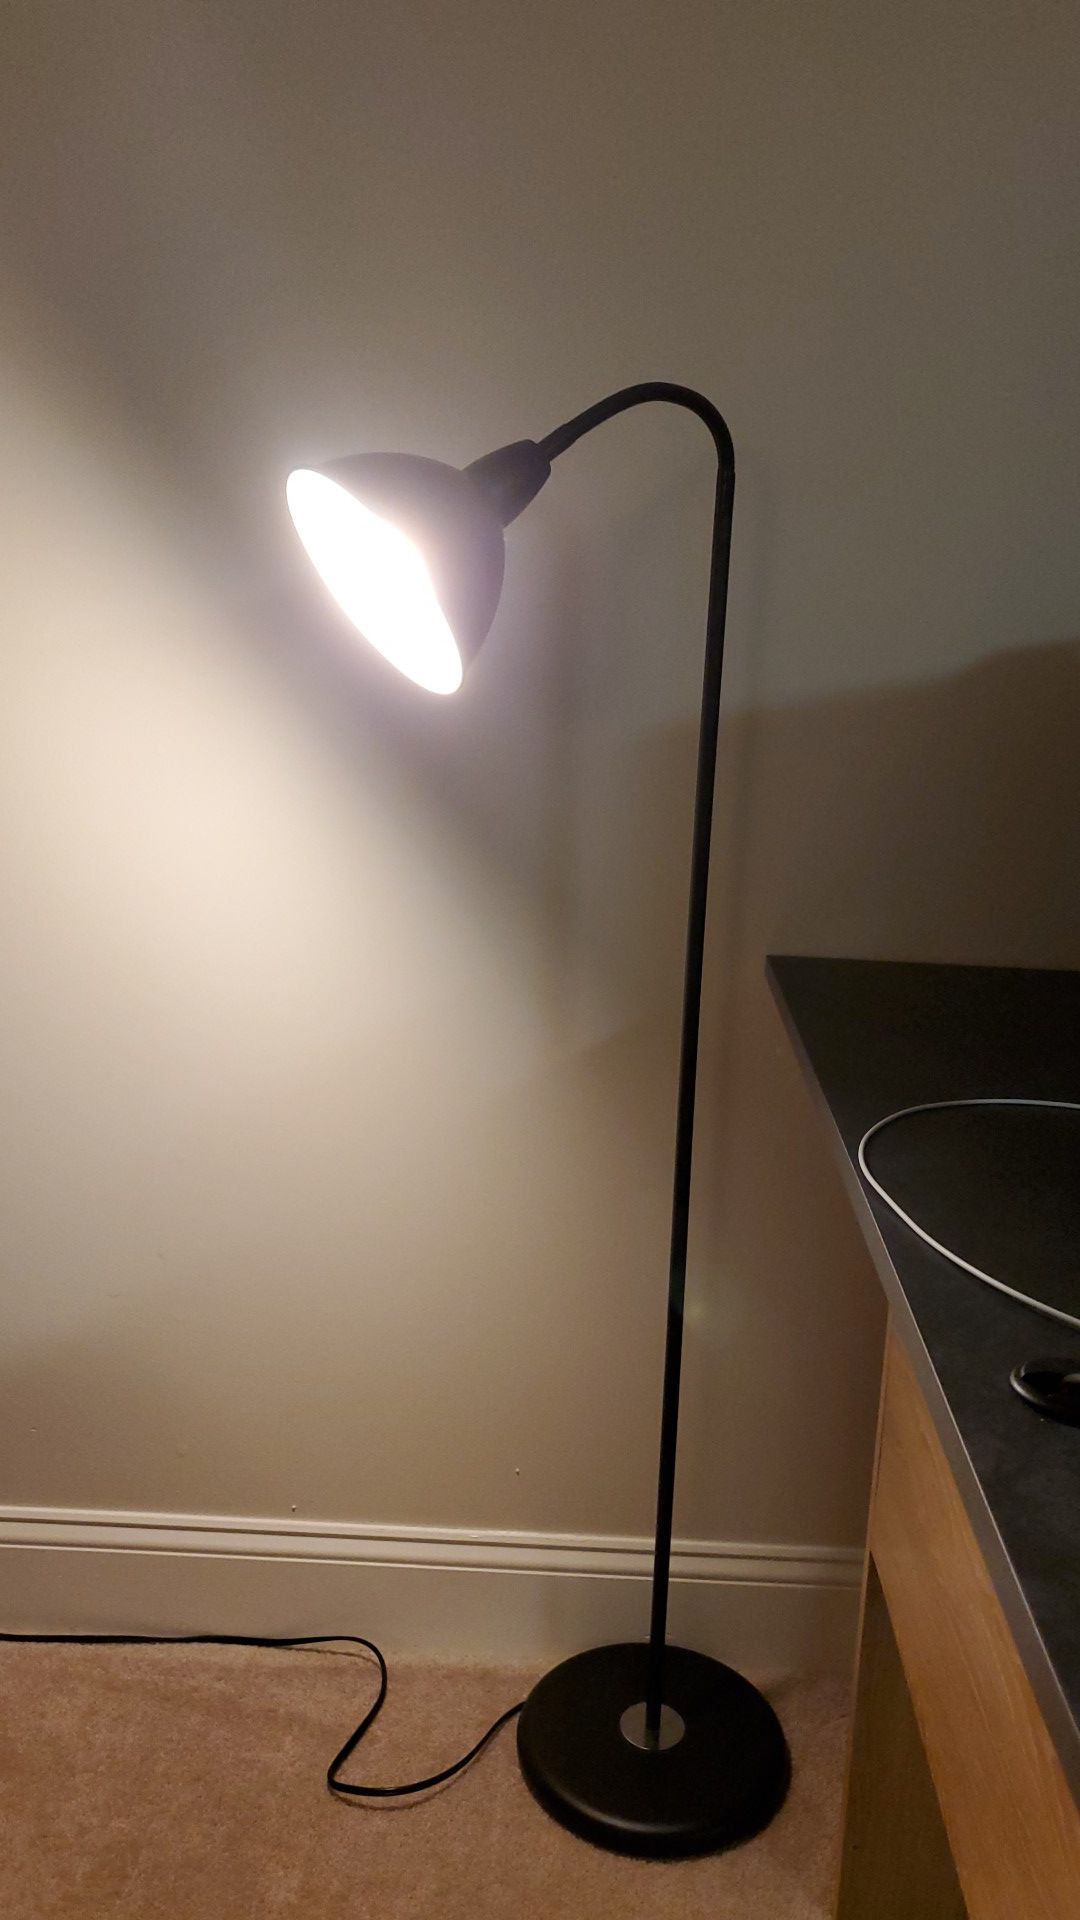 Floor lamp, 8 month old